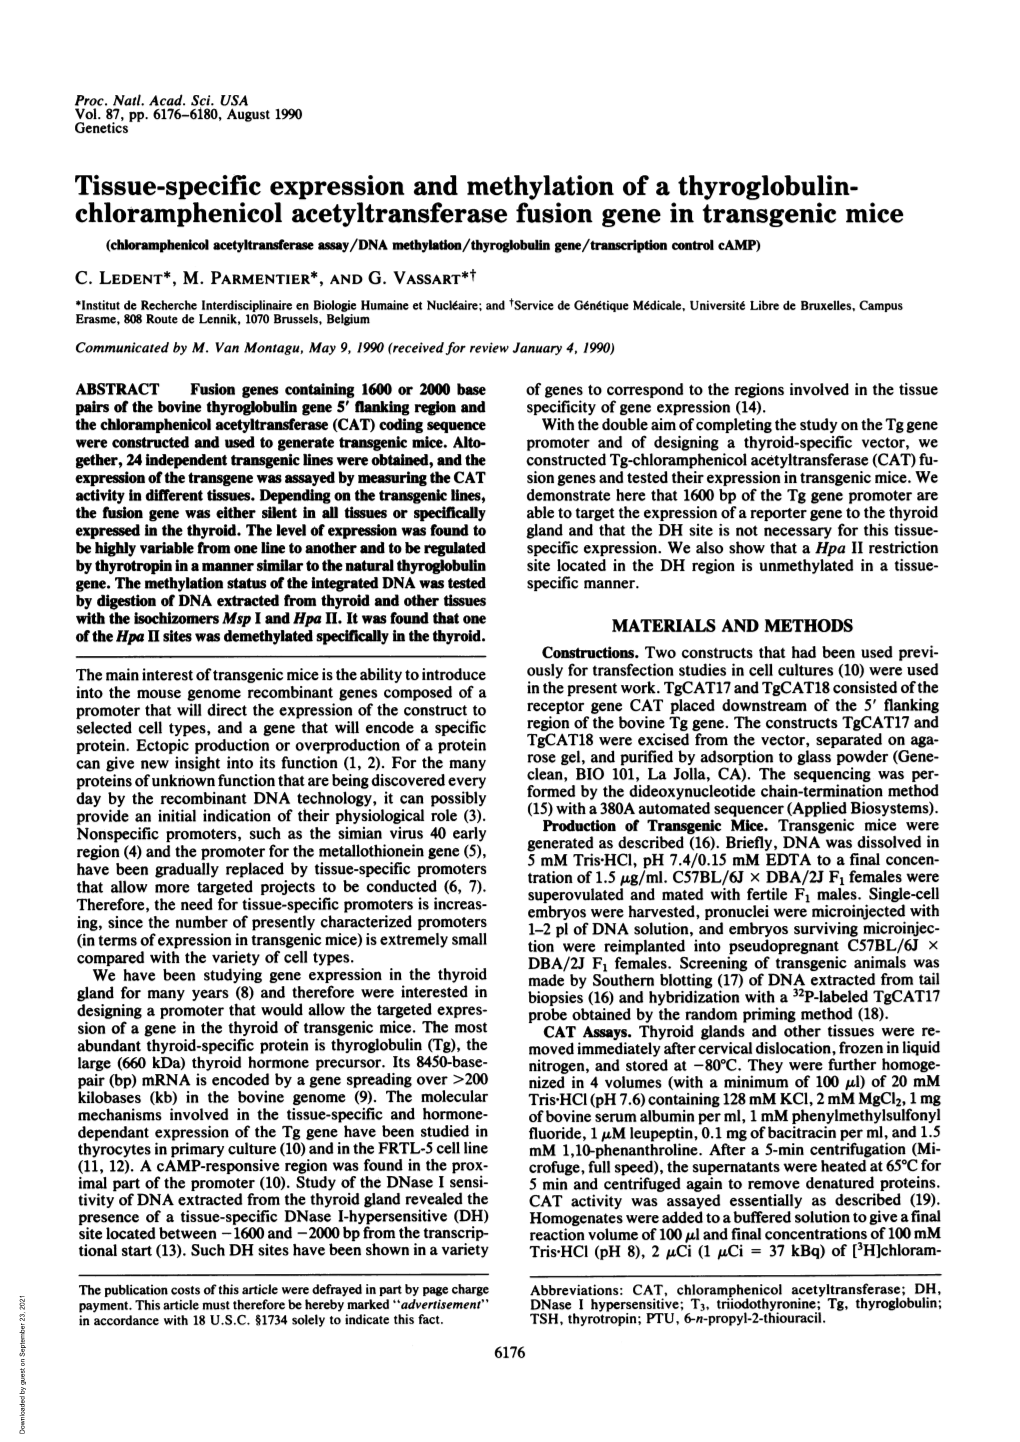 Chloramphenicol Acetyltransferase Fusion Gene in Transgenic Mice